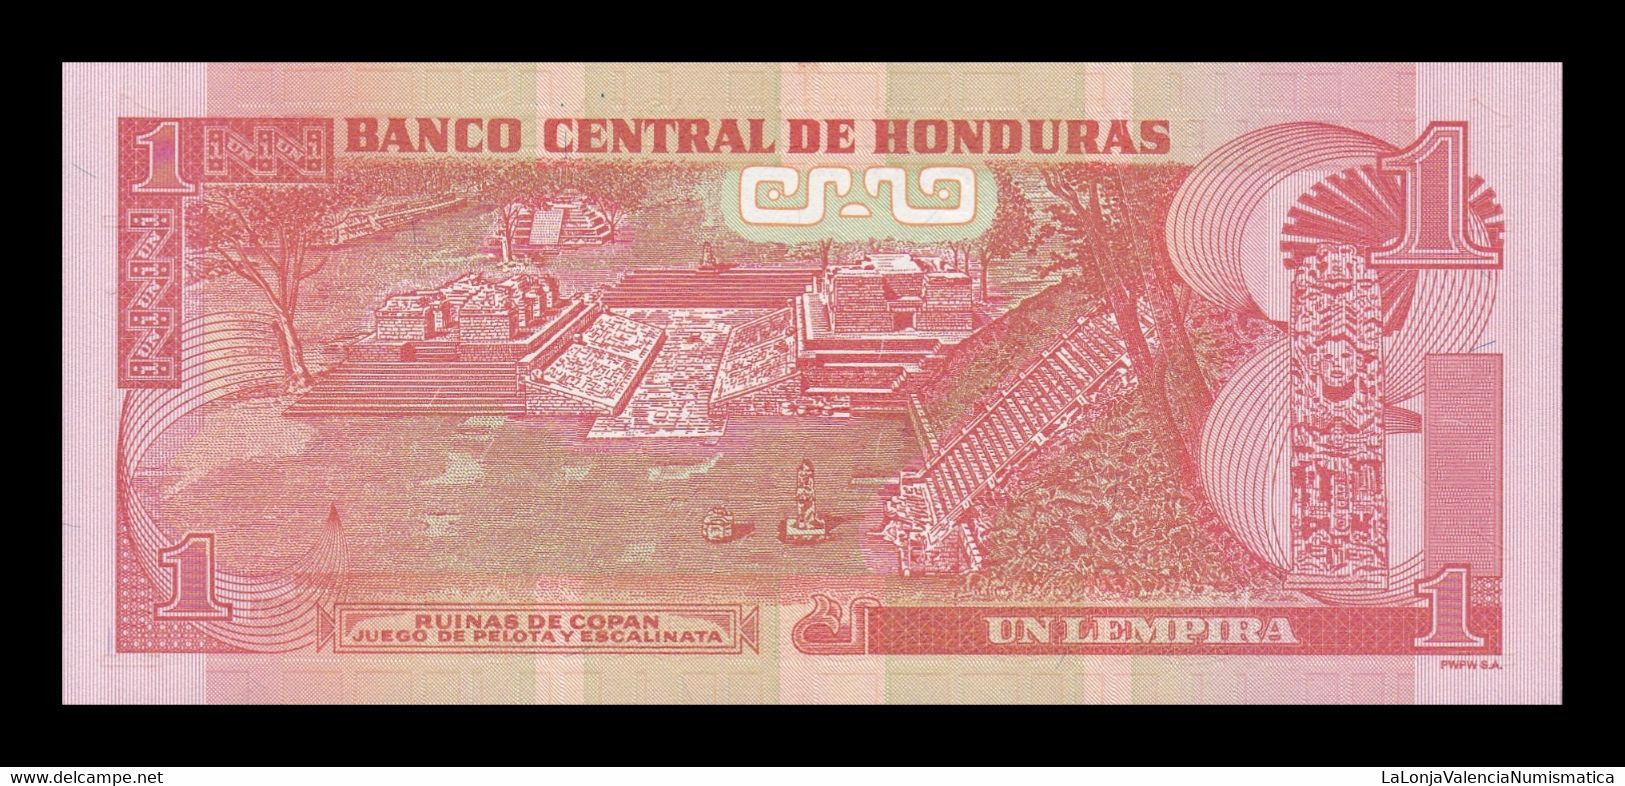 Honduras Taco 100 Billetes 1 Lempira 2019 Pick 96d SC UNC - Honduras